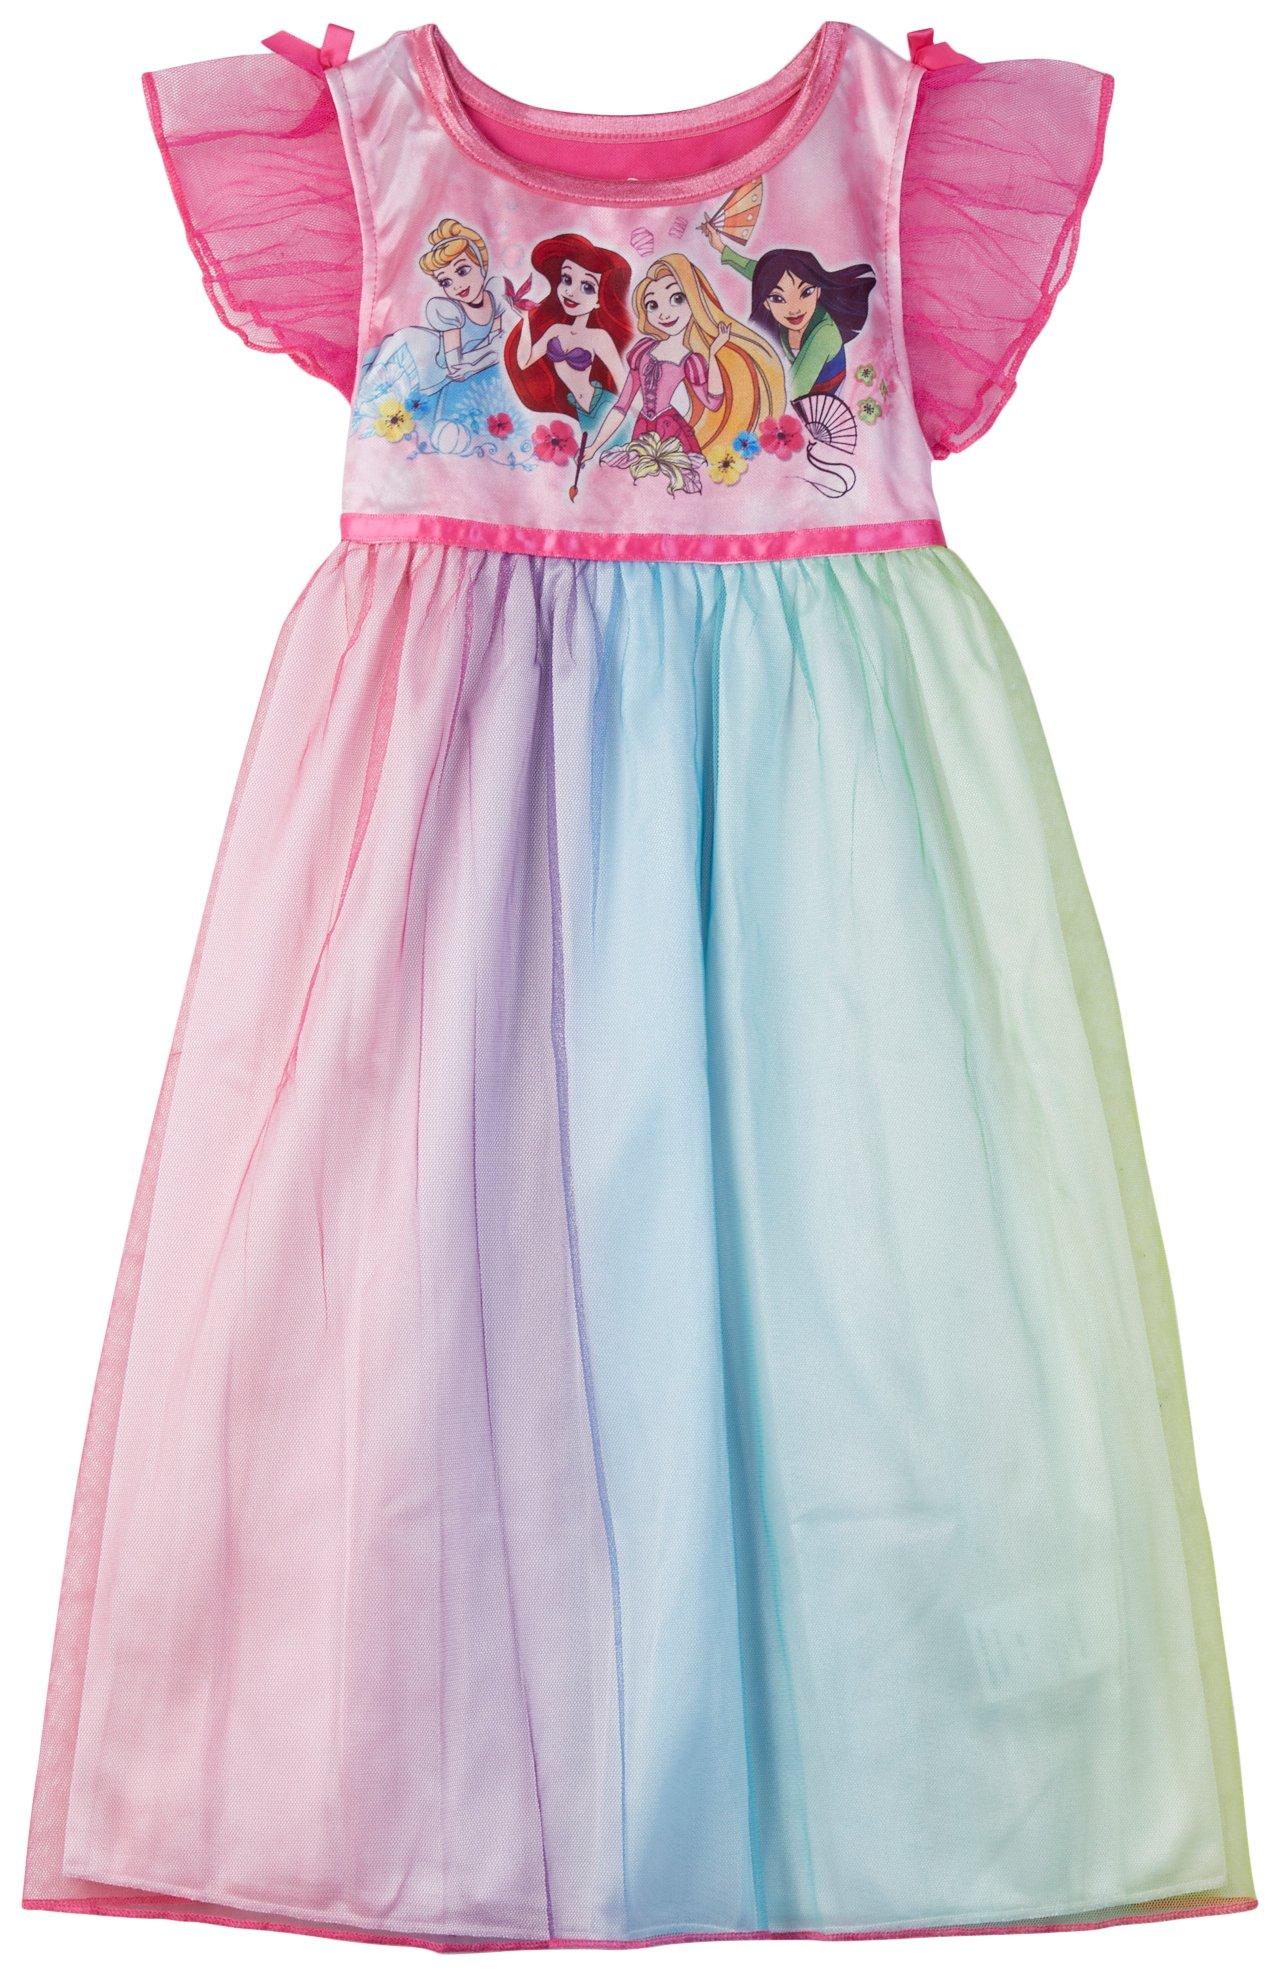 Disney Princess Toddler Girls Gown Party Dress